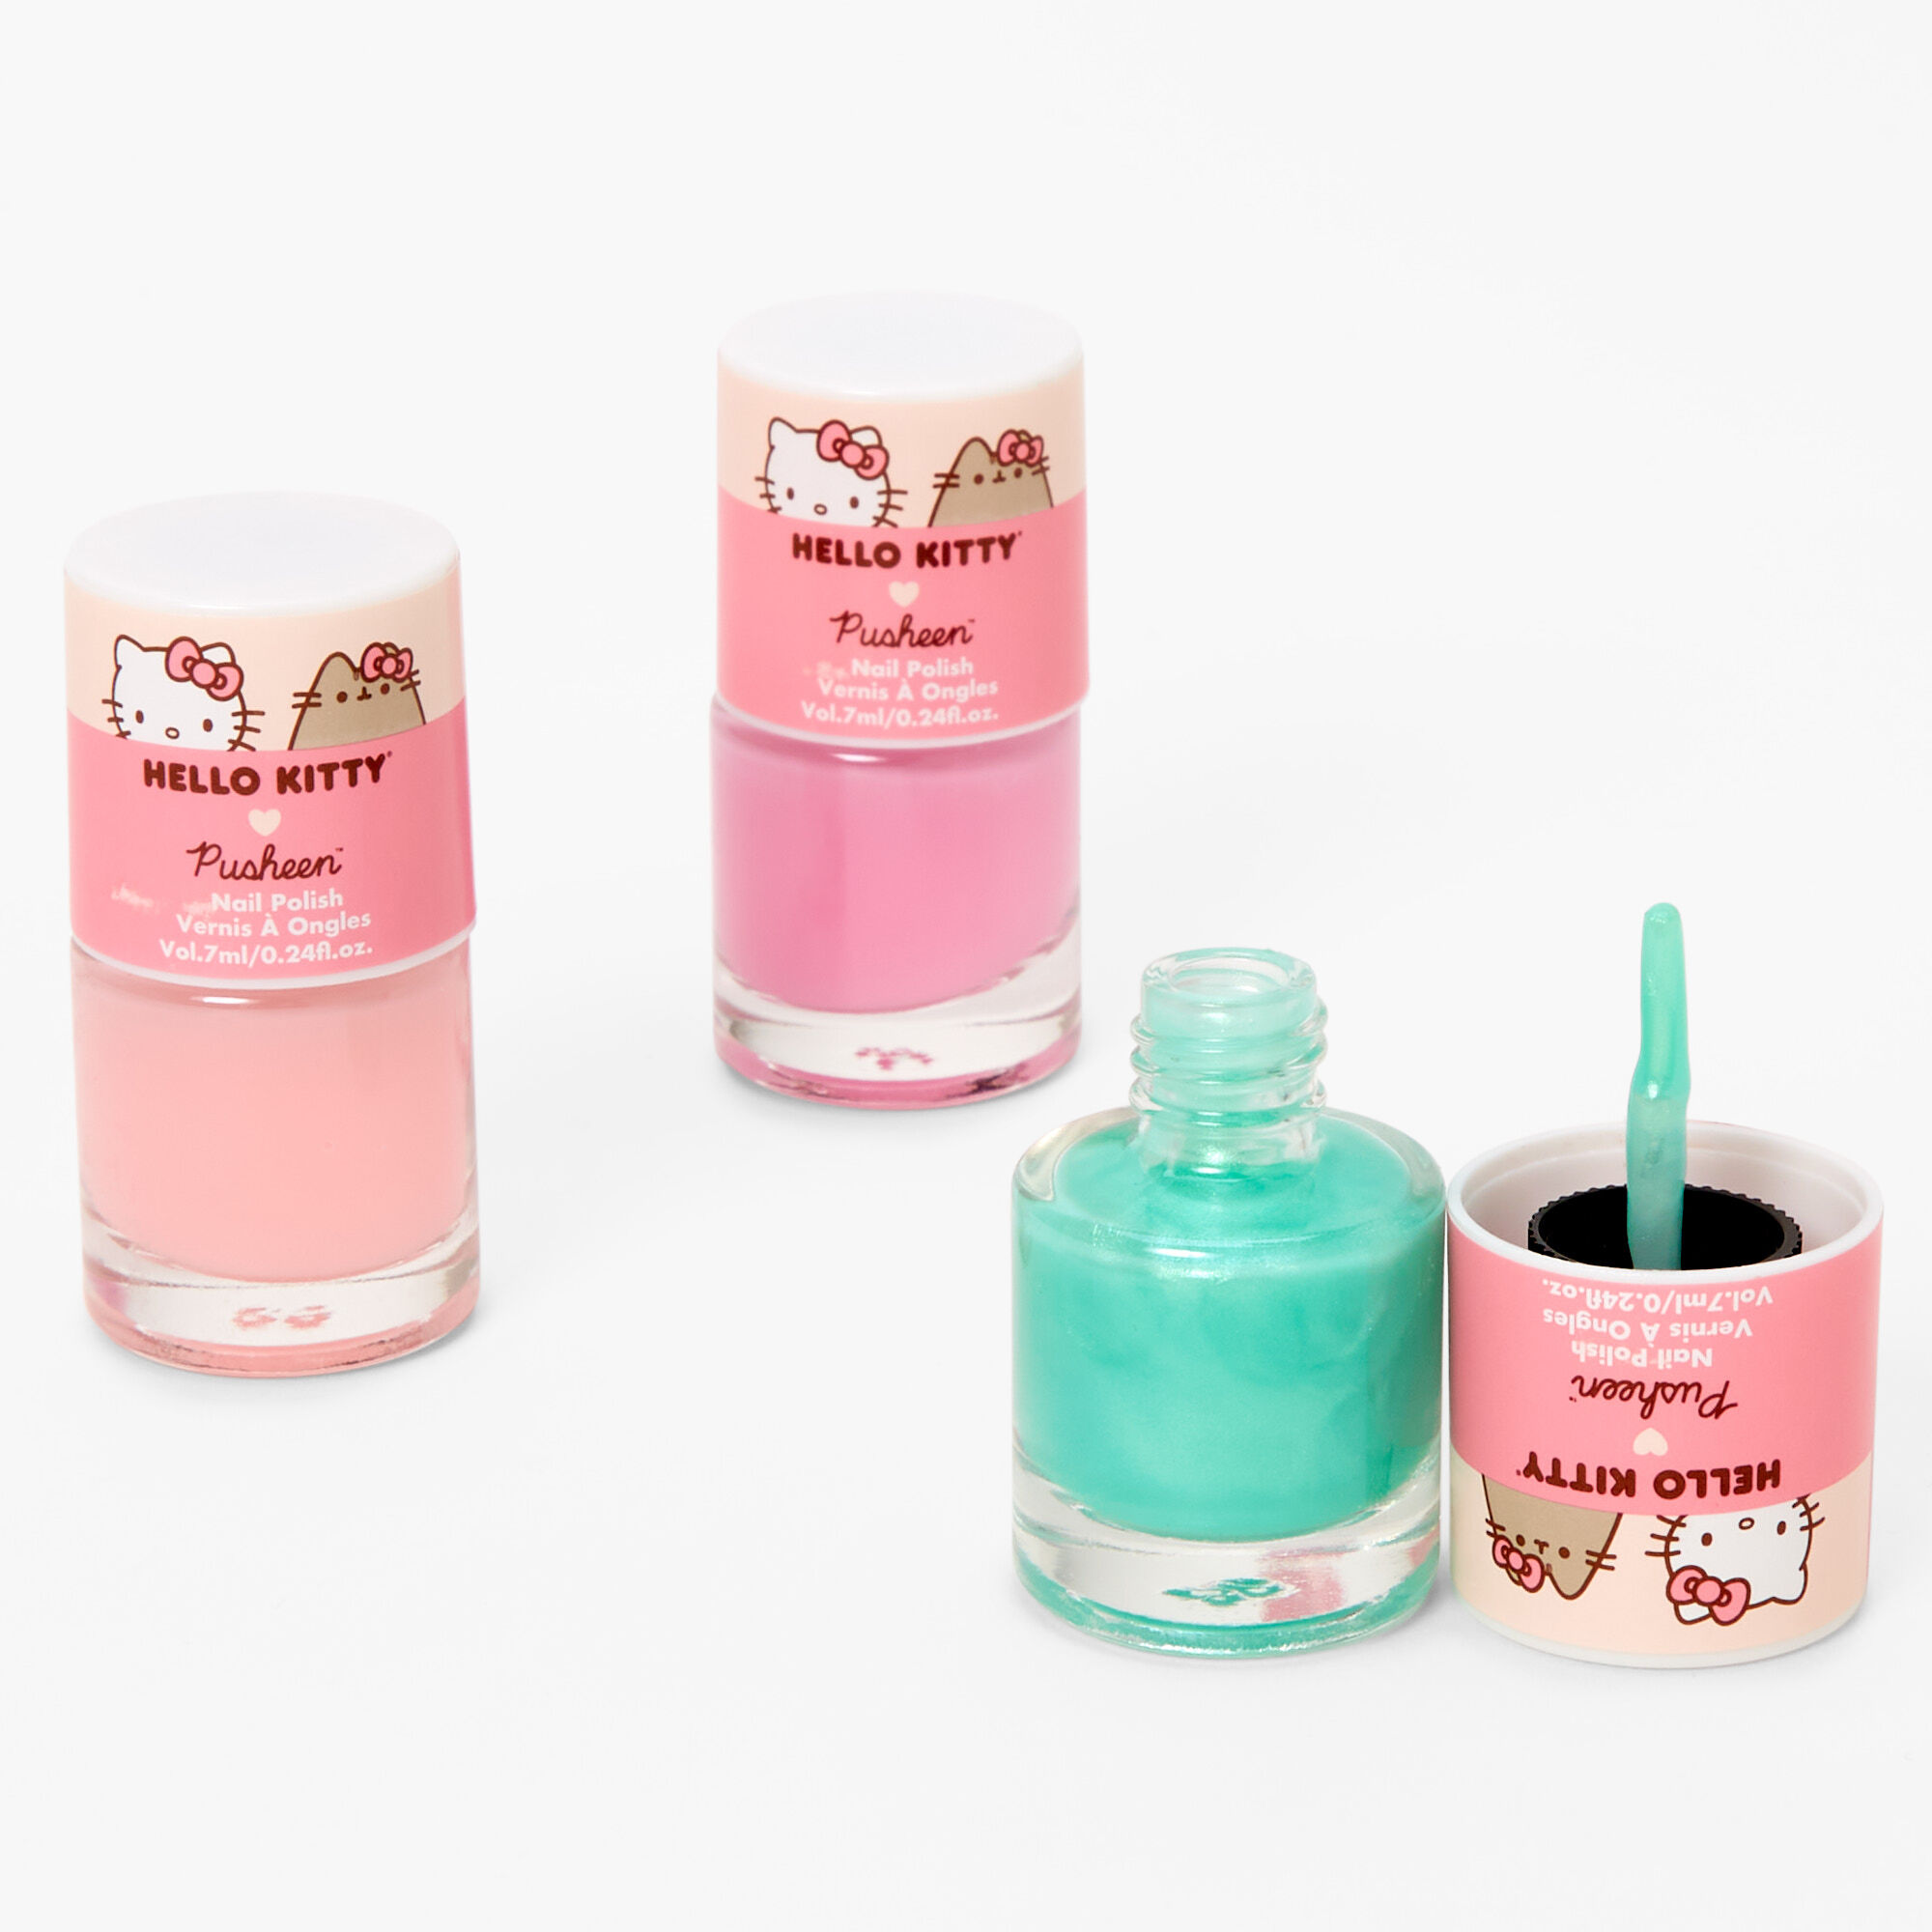 Hello Kitty OPI Nail Polish Collaboration | POPSUGAR Beauty